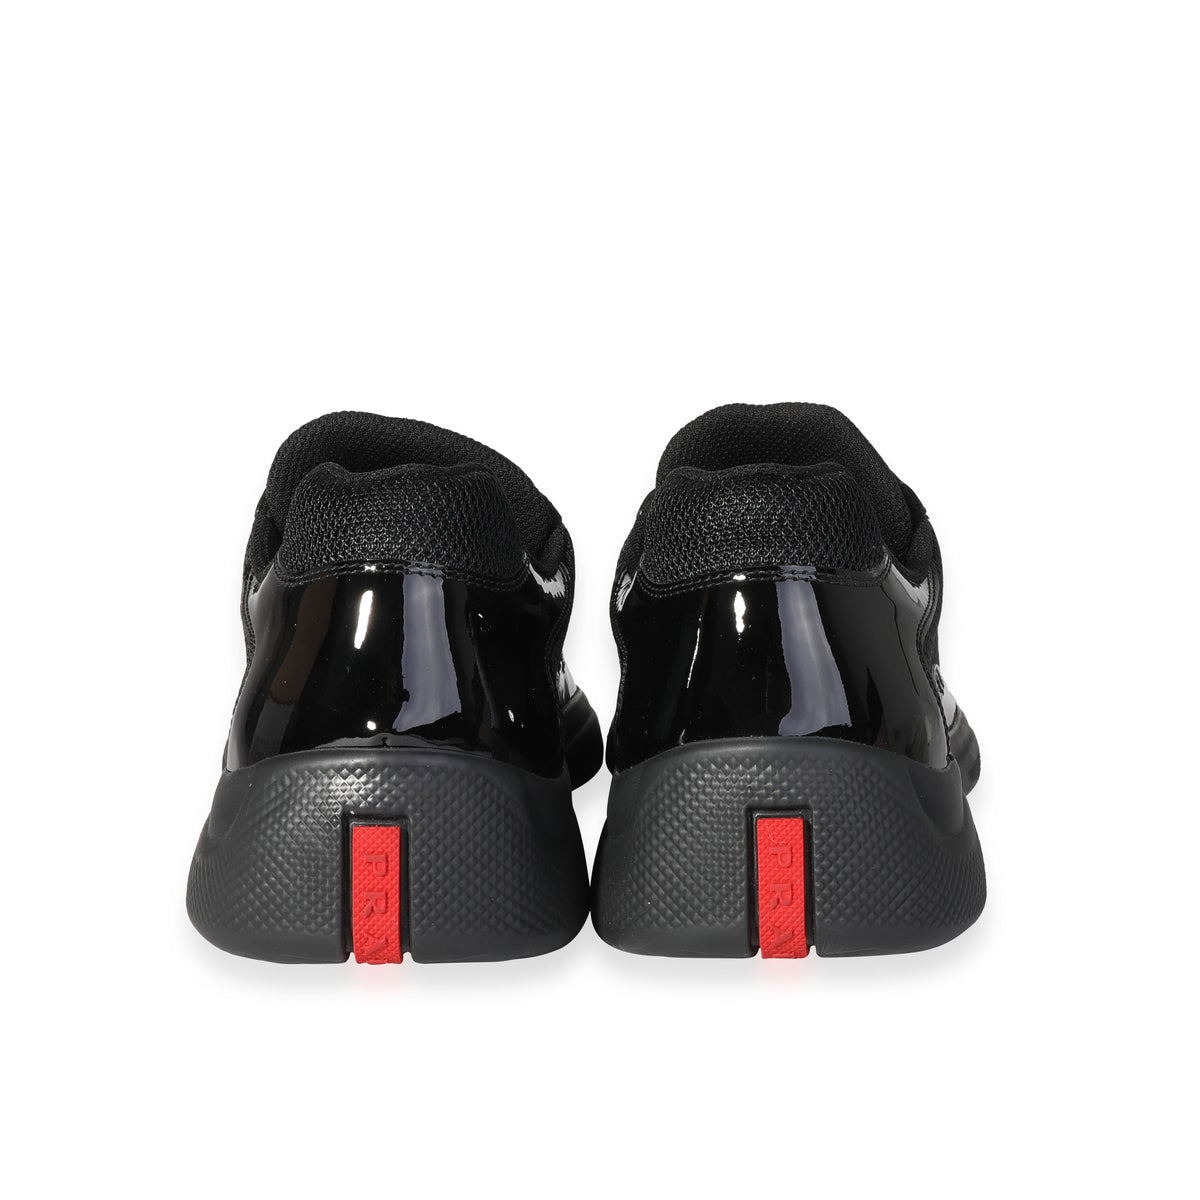 Prada Men's Red Leather Americas Cup Sneaker 4E3400